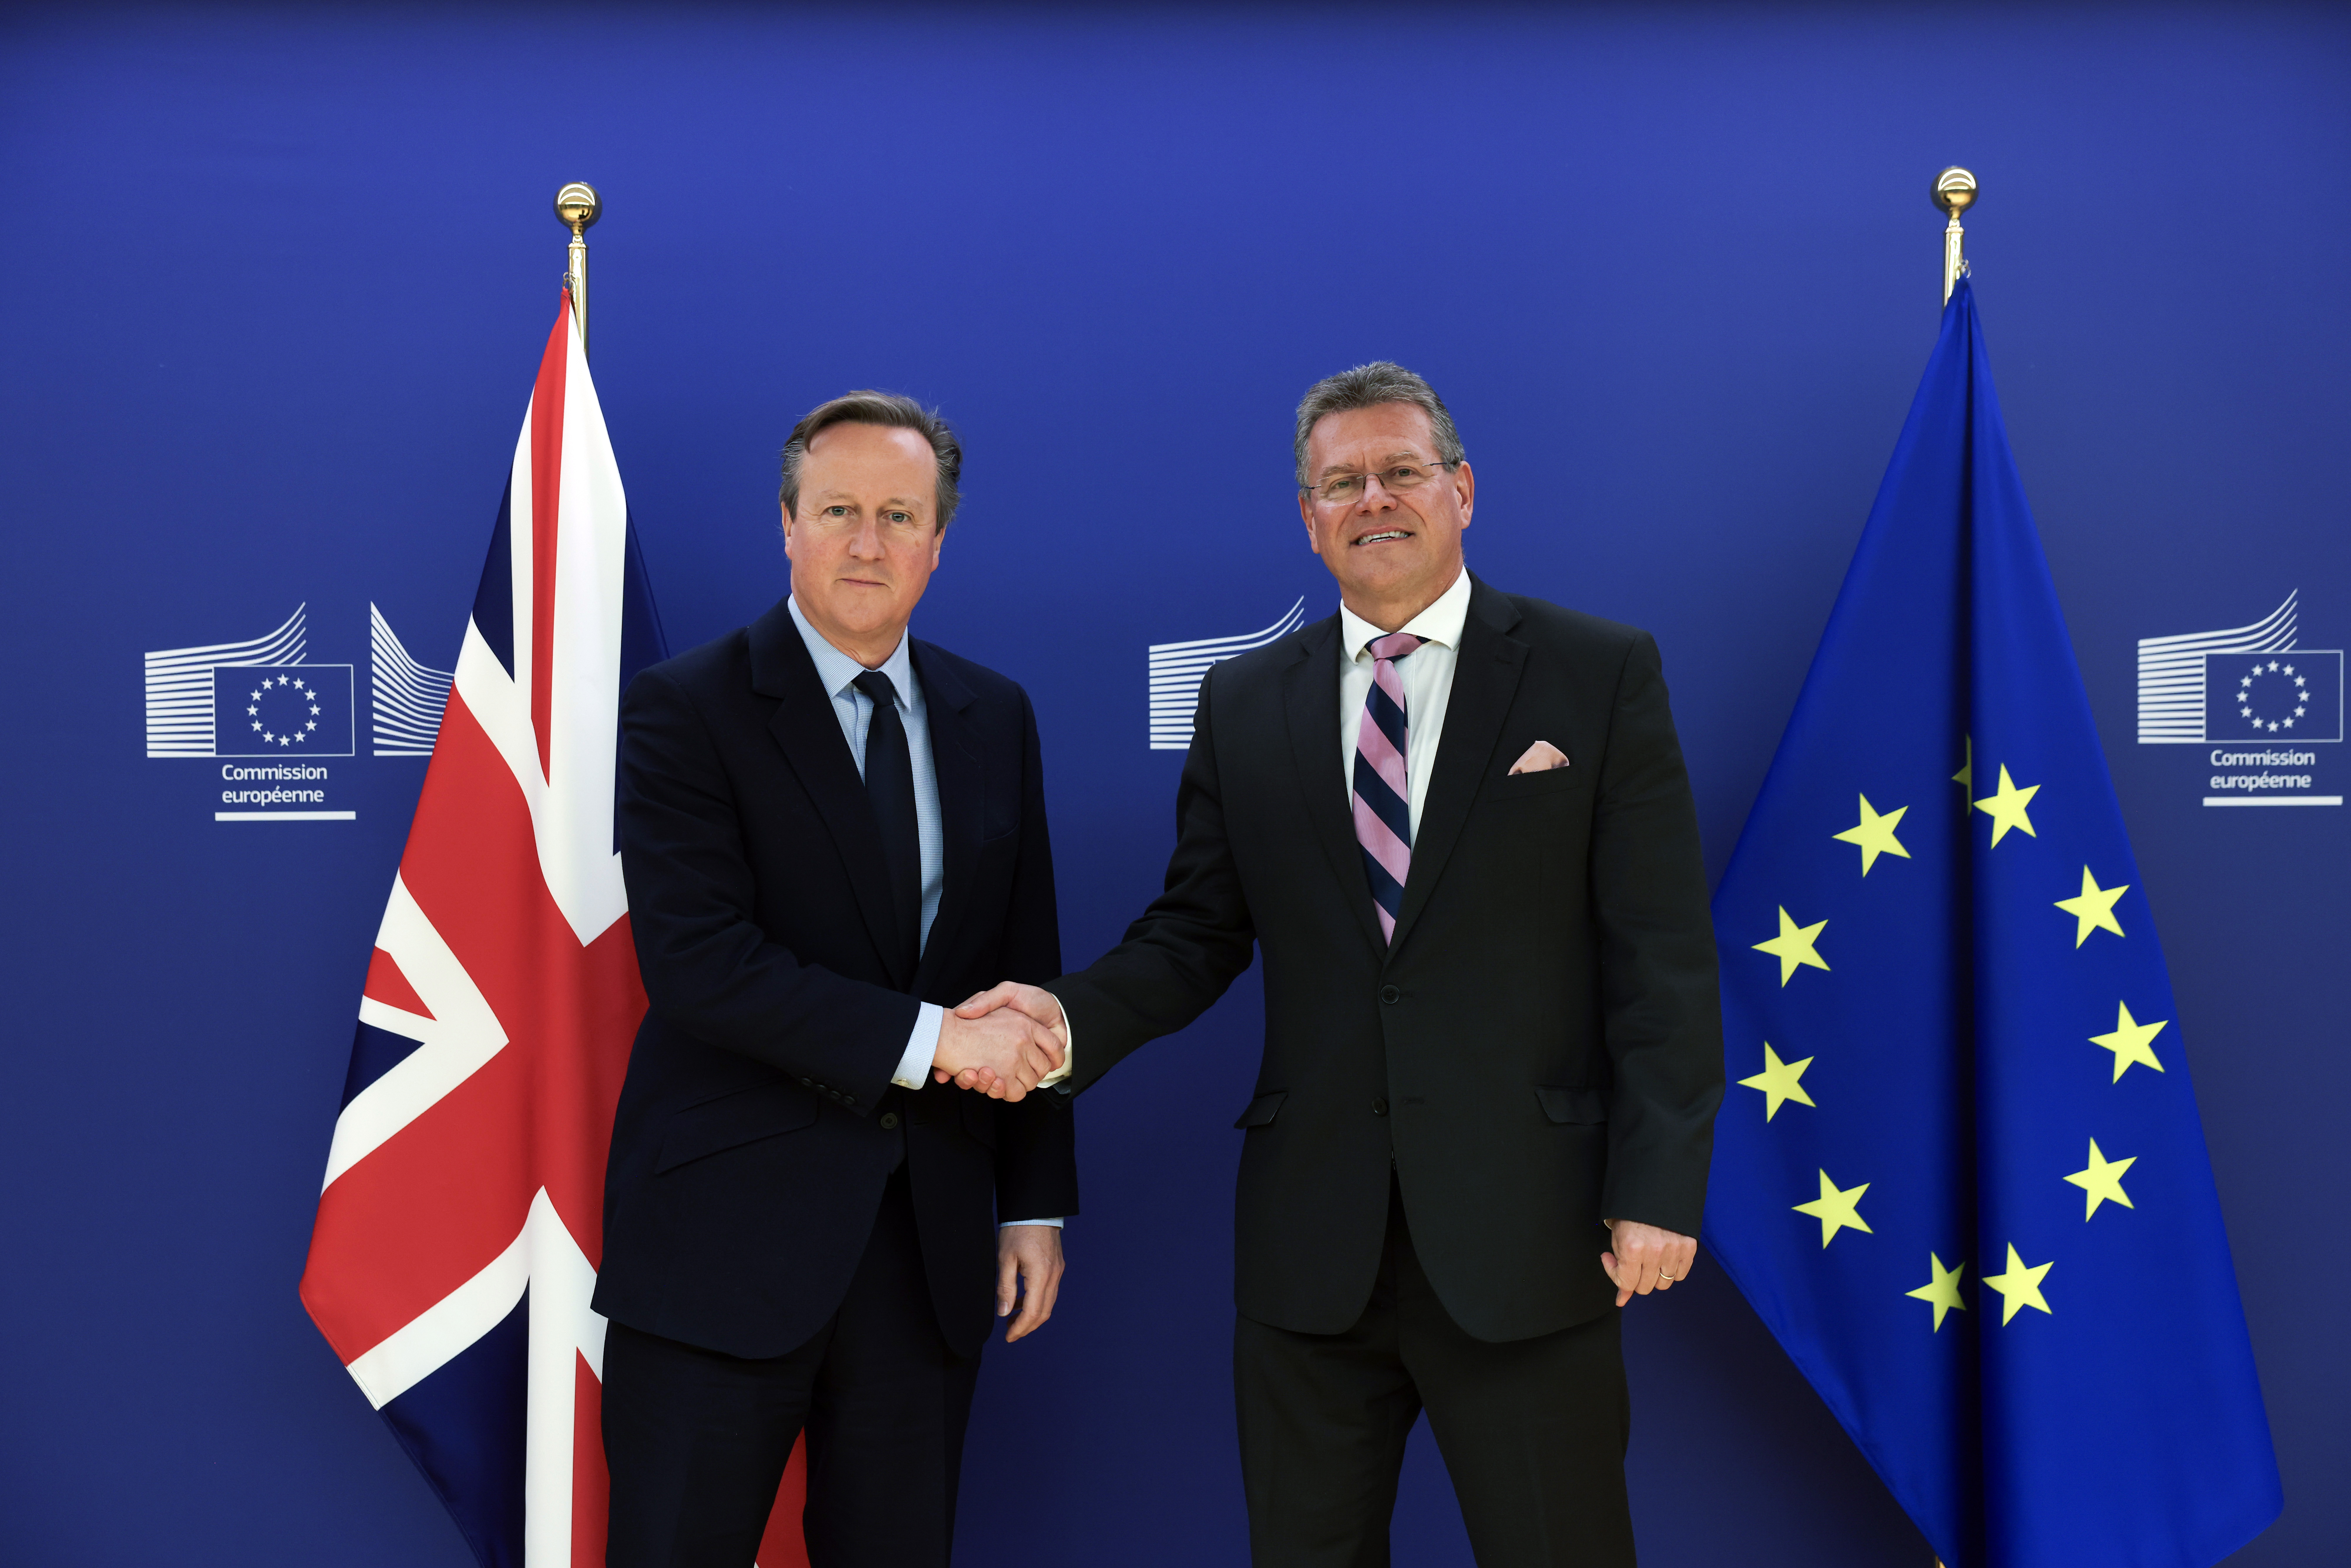 UK Foreign Secretary Lord Cameron and Vice-President of the European Commission Maroš Šefčovič 